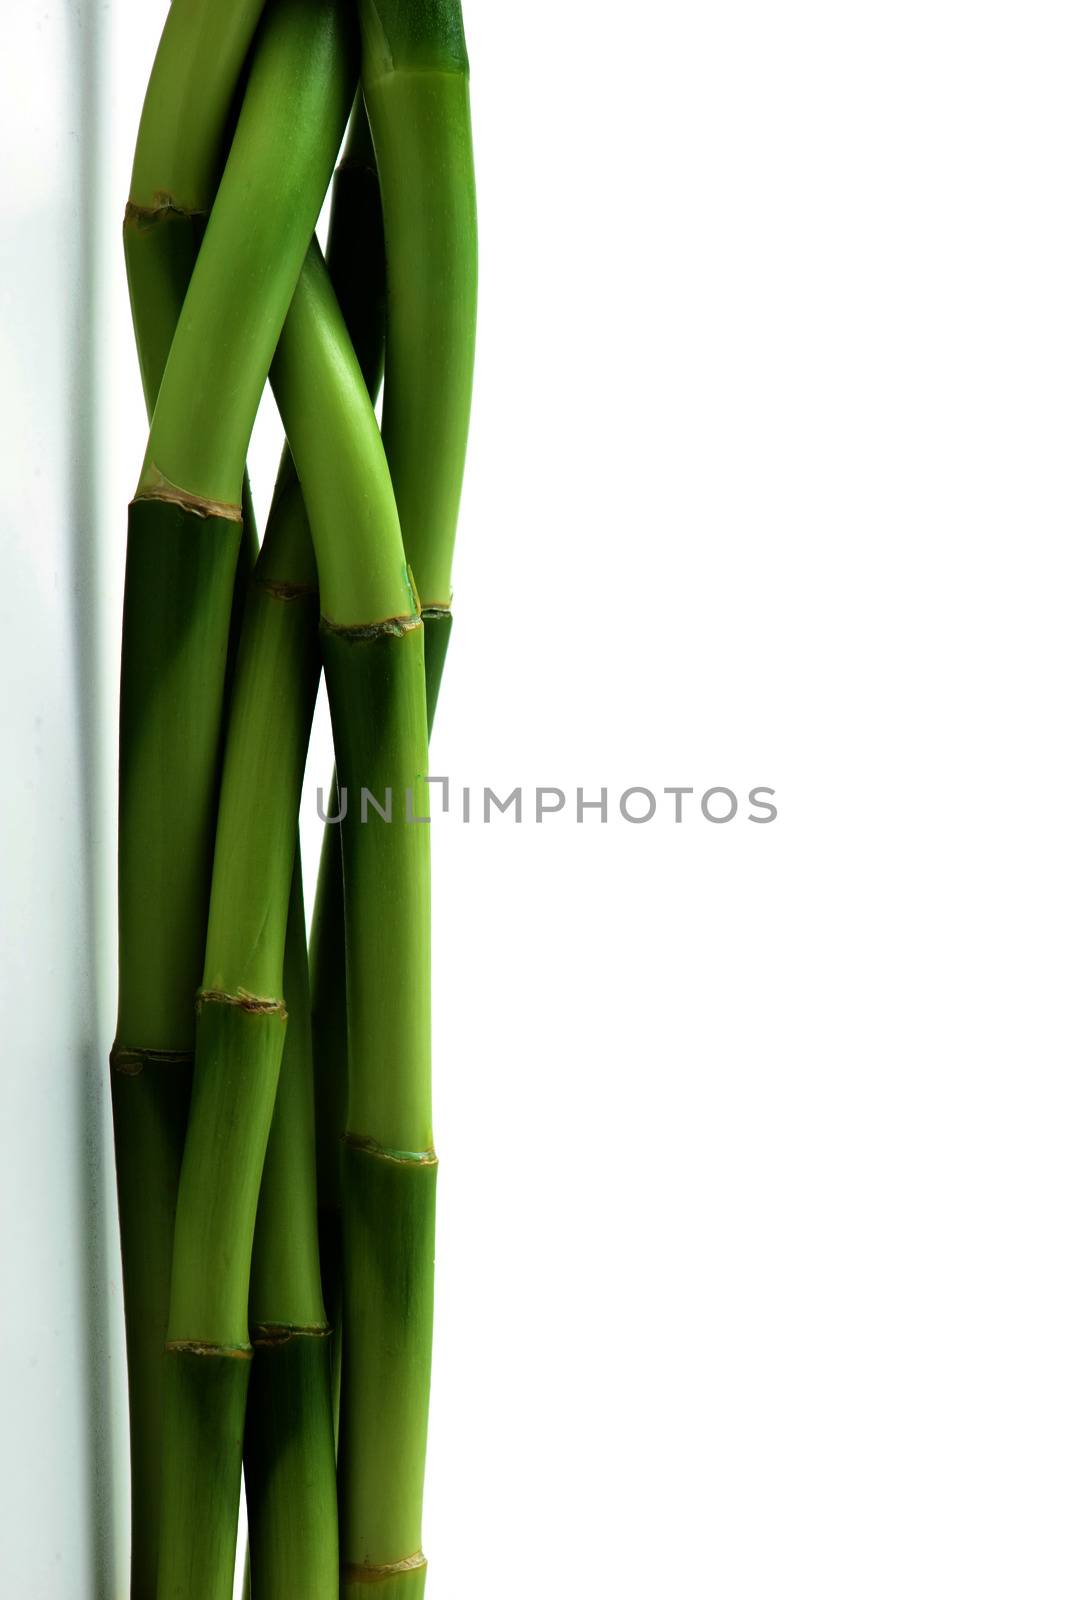 bamboo stem on white background